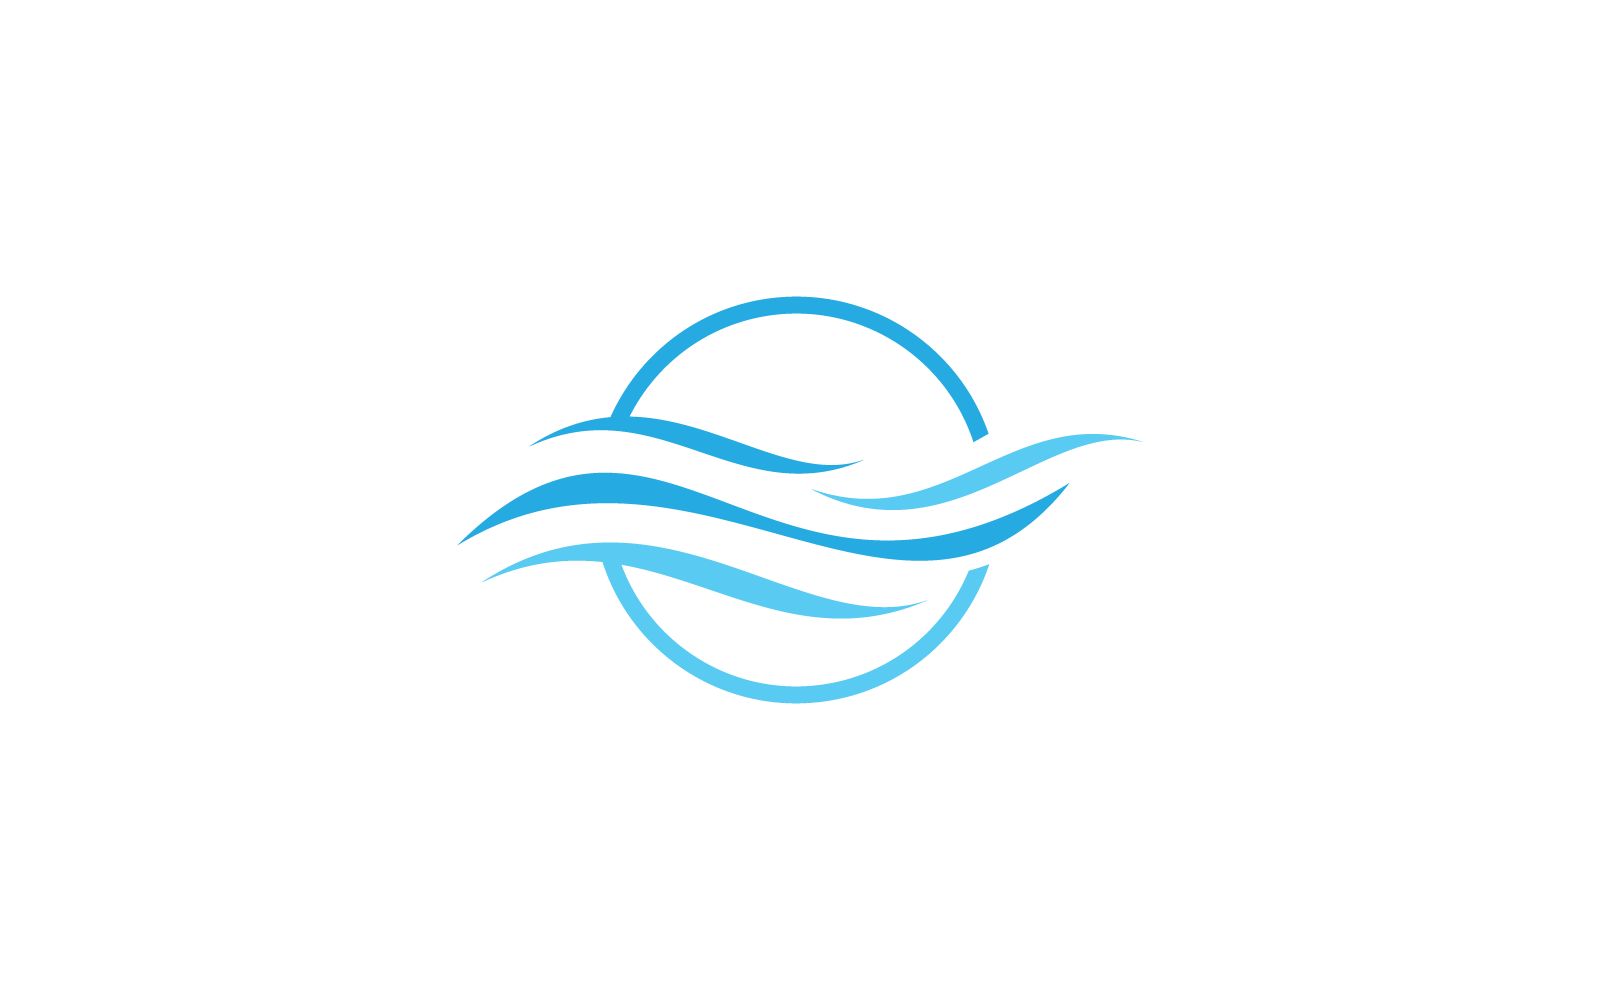 Water Wave design vector logo illustration template